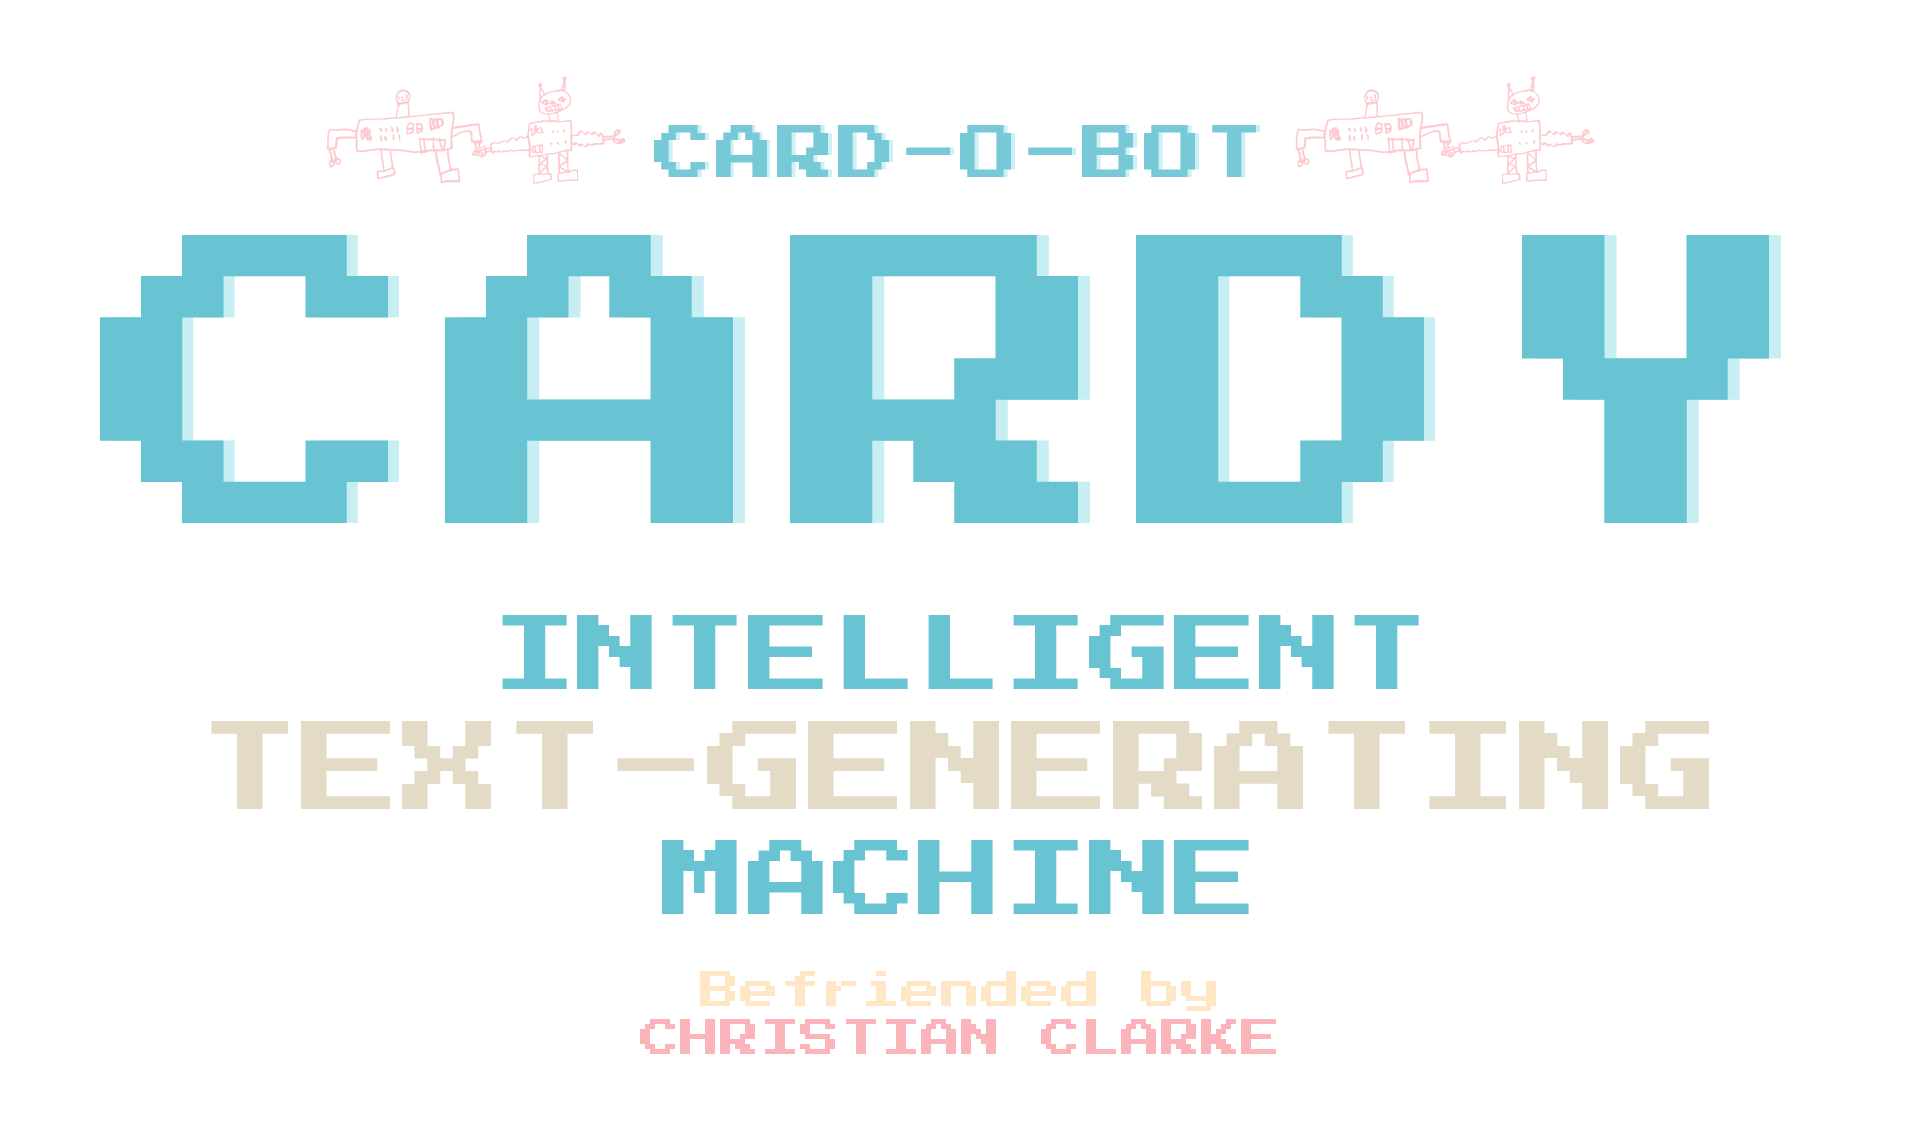 Card-o-bot. CARDY. Intelligent text-generating machine.